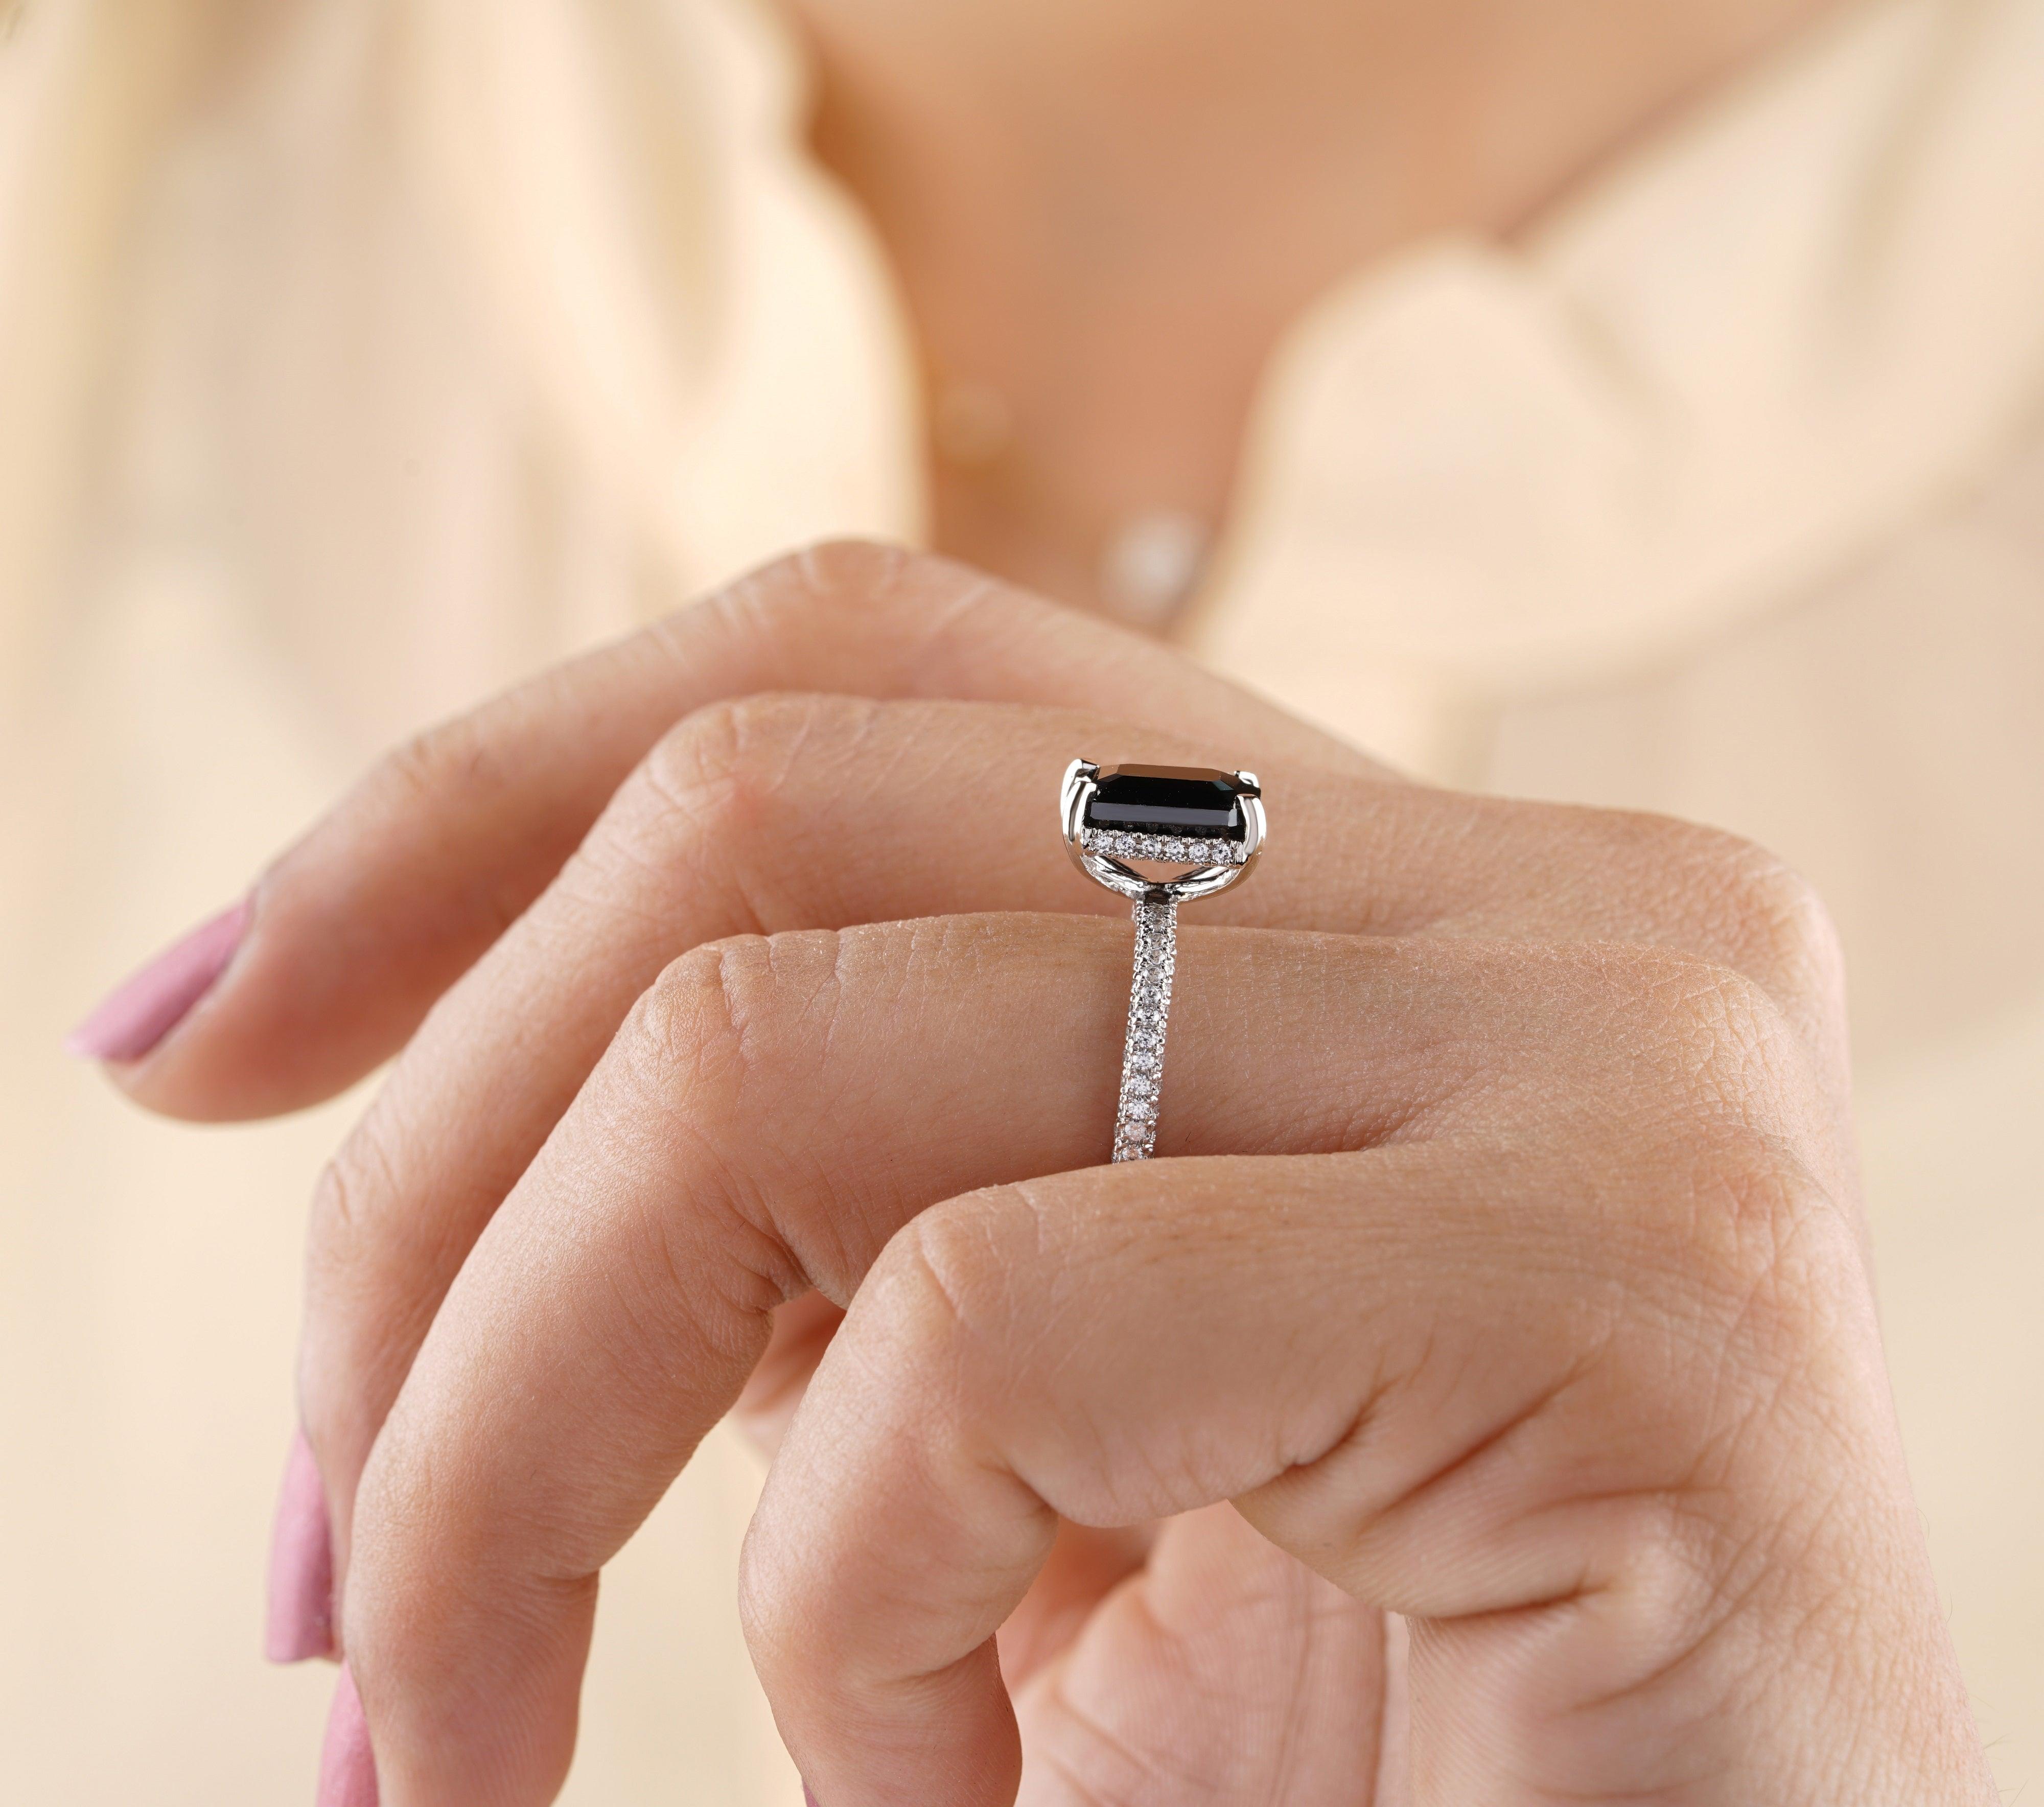 Radiant Cut Black Onyx Diamond Engagement Ring - Eurekalook